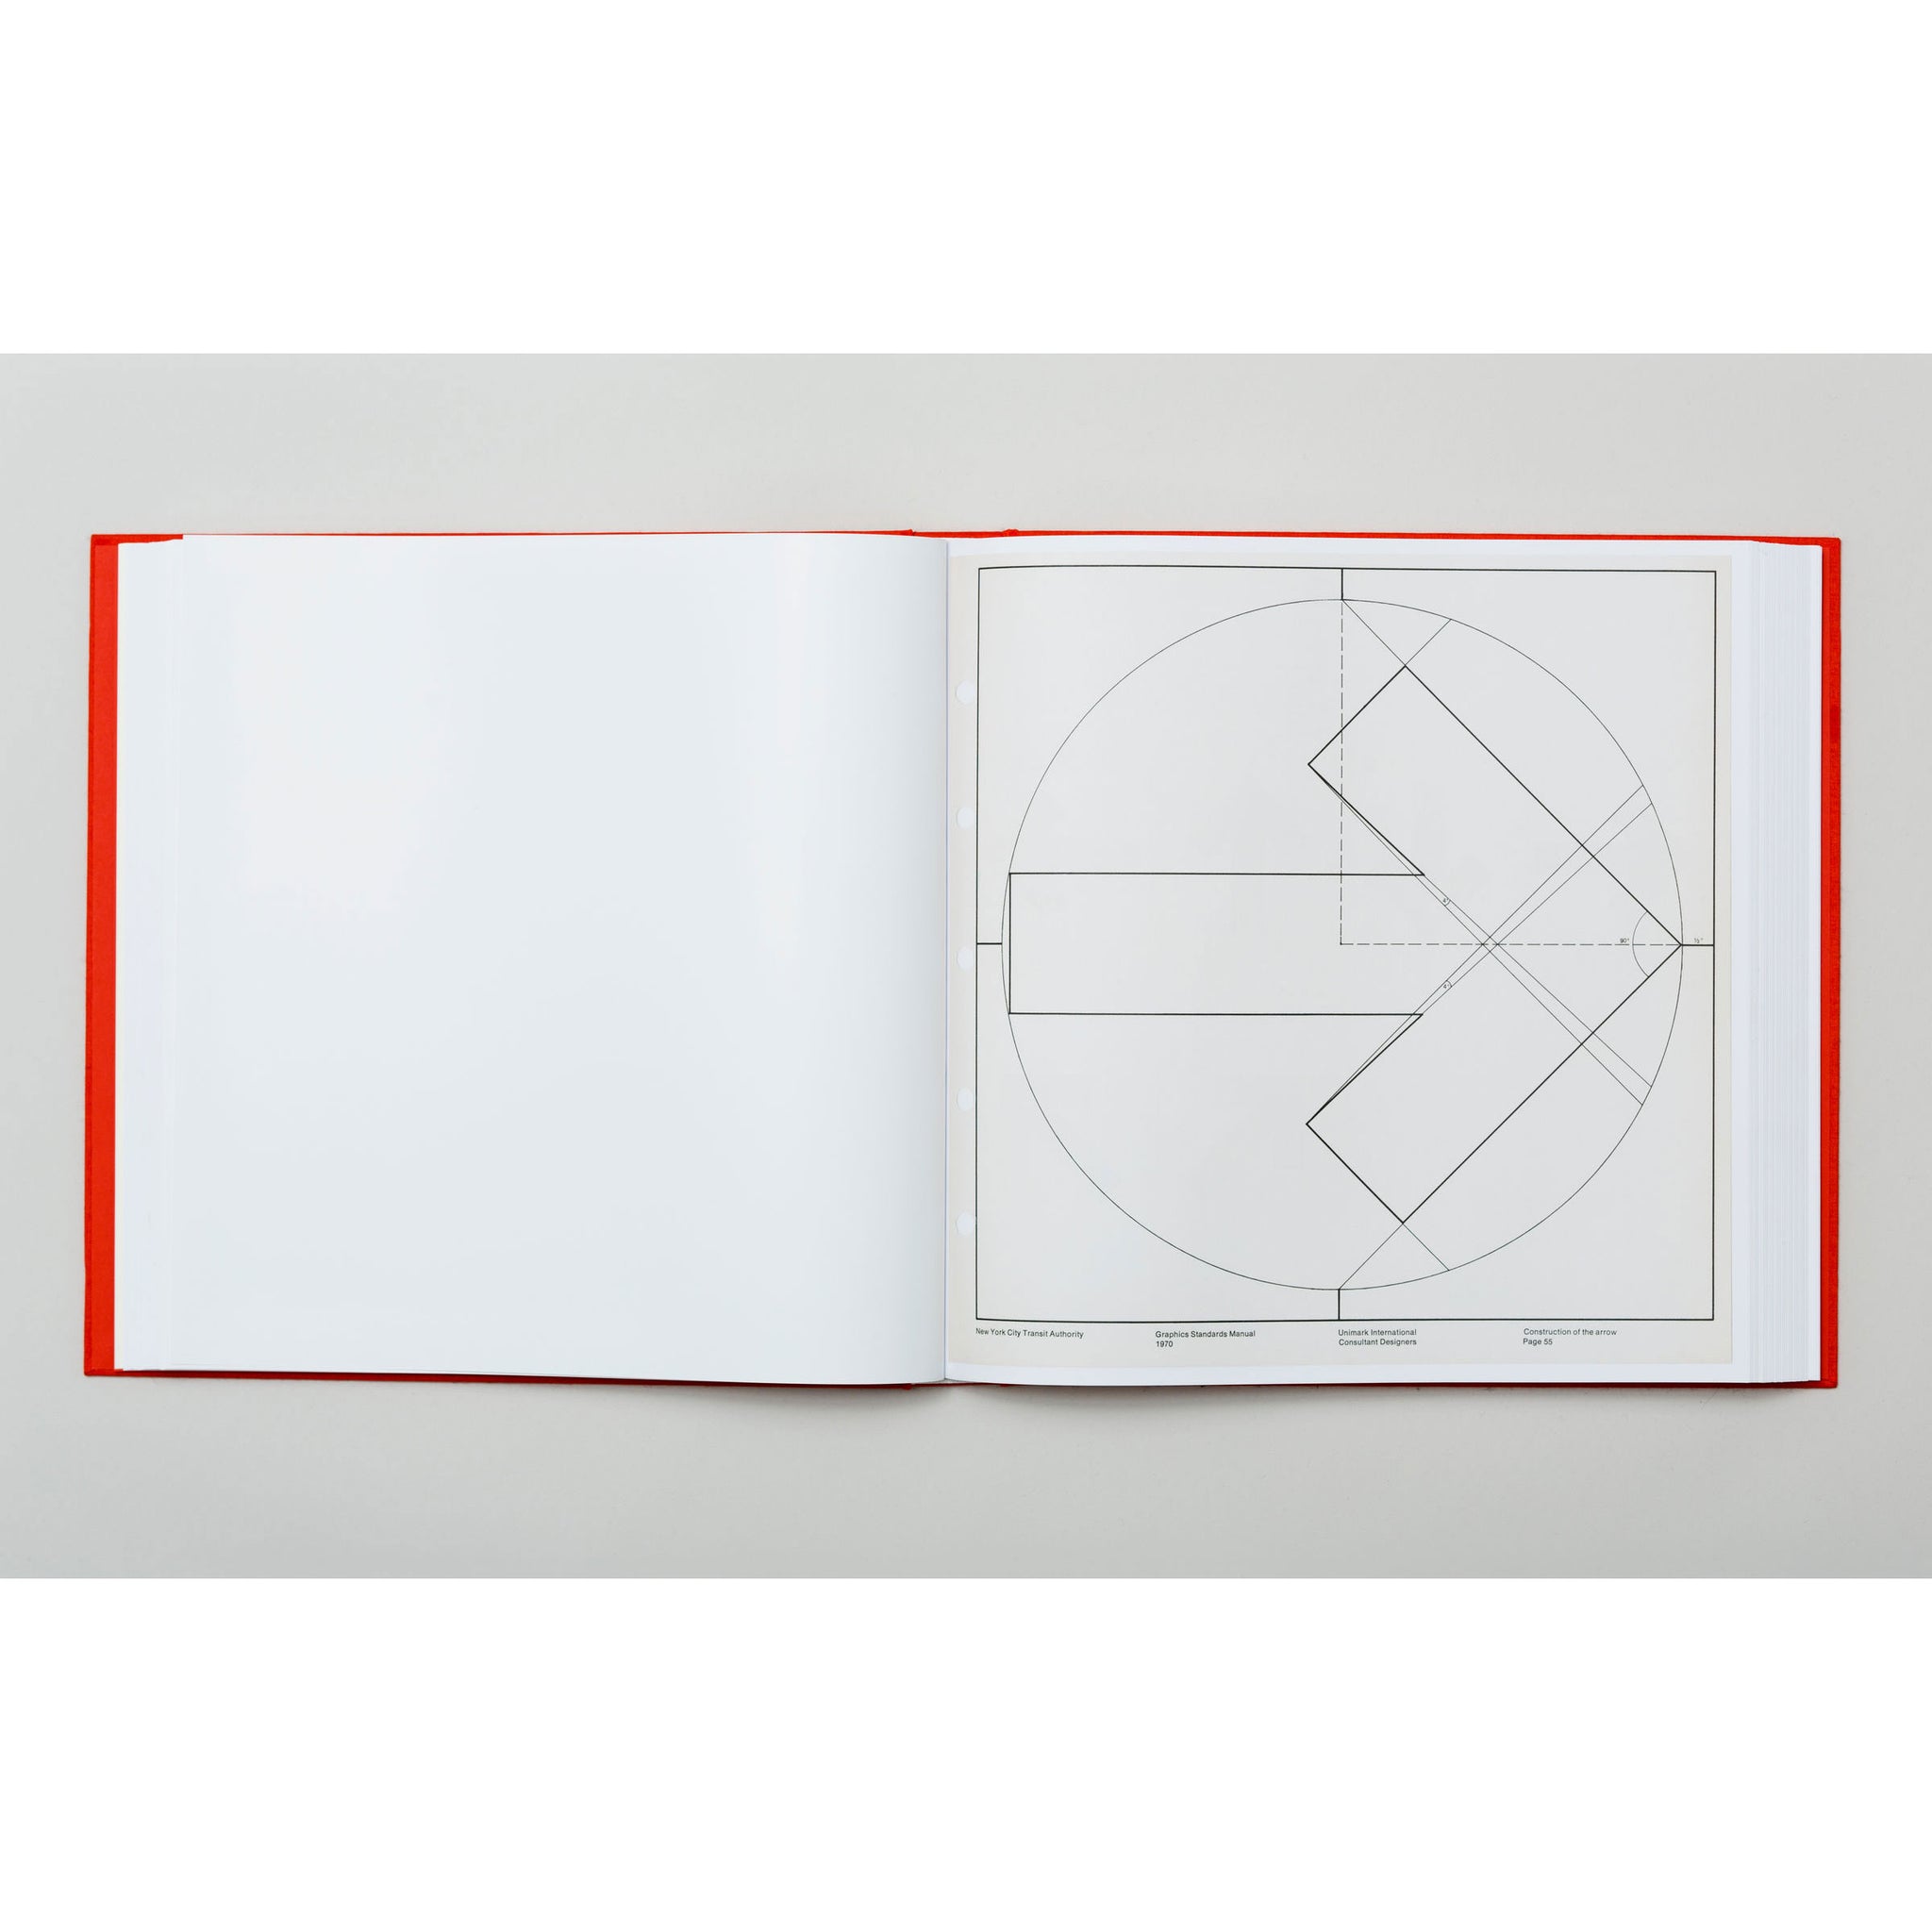 NYCTA Graphics Standards Manual - Compact Edition